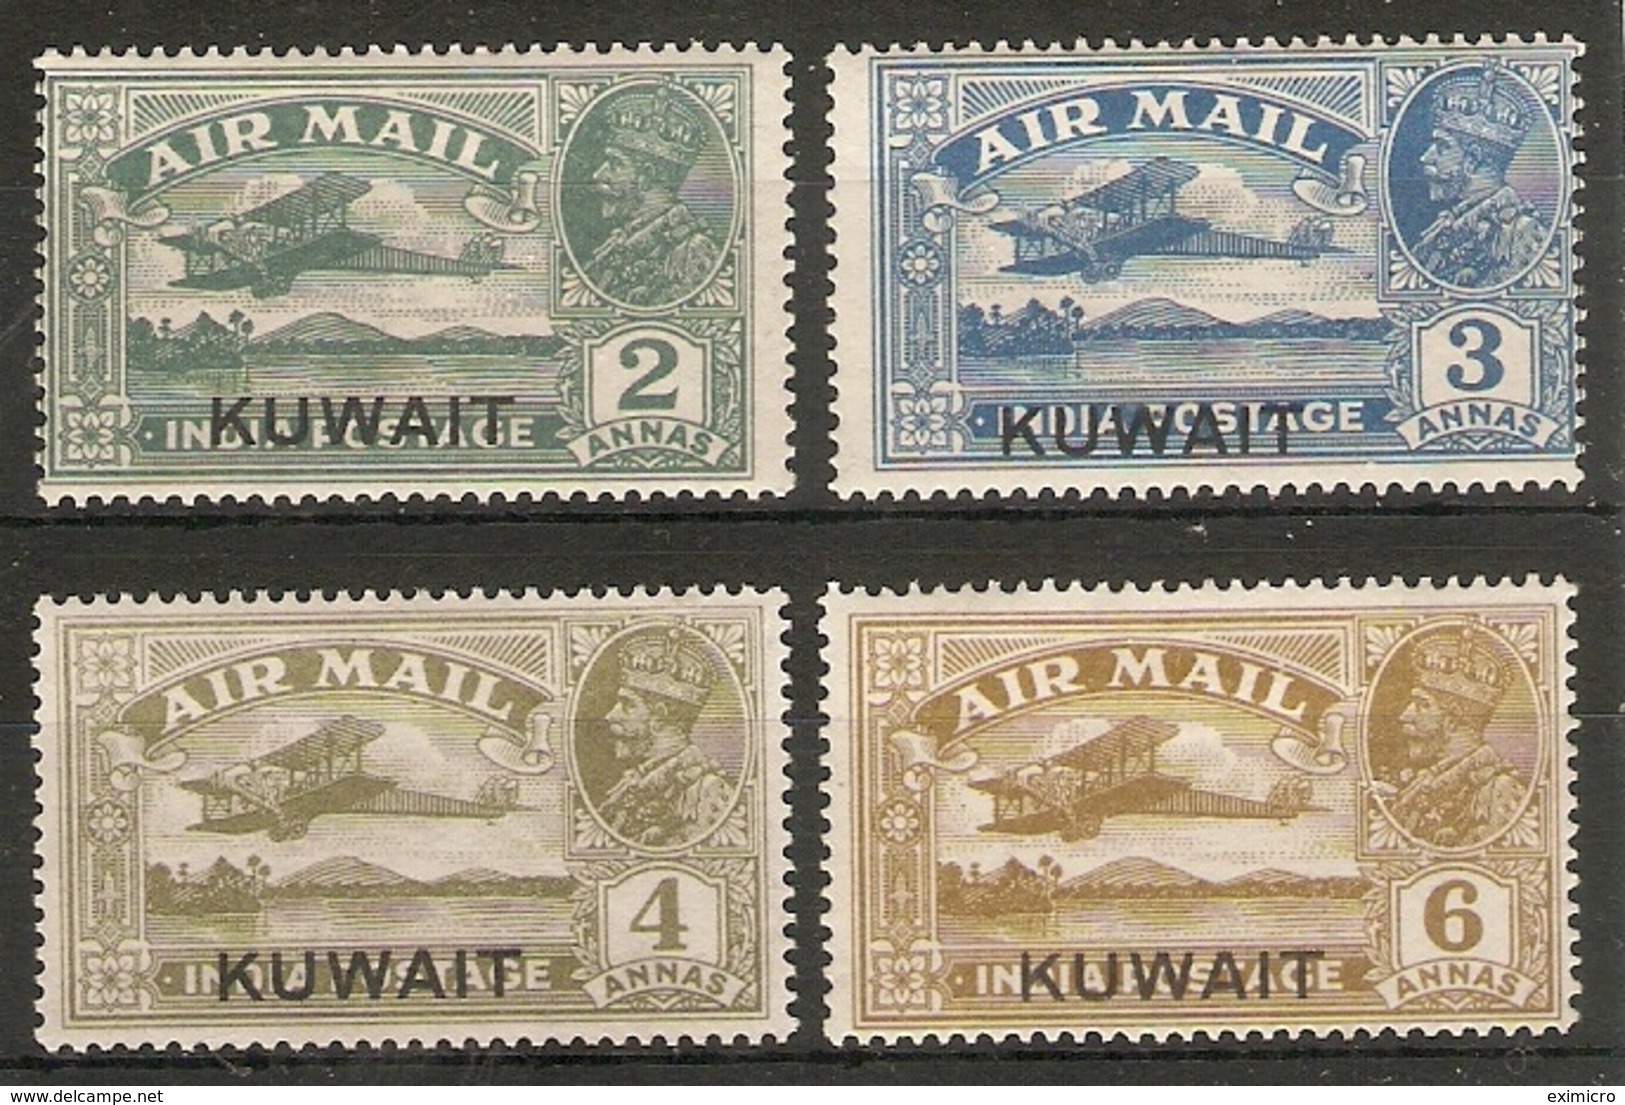 KUWAIT 1933 - 1934 AIR SET SG 31/34 MOUNTED MINT Cat £180 - Kuwait